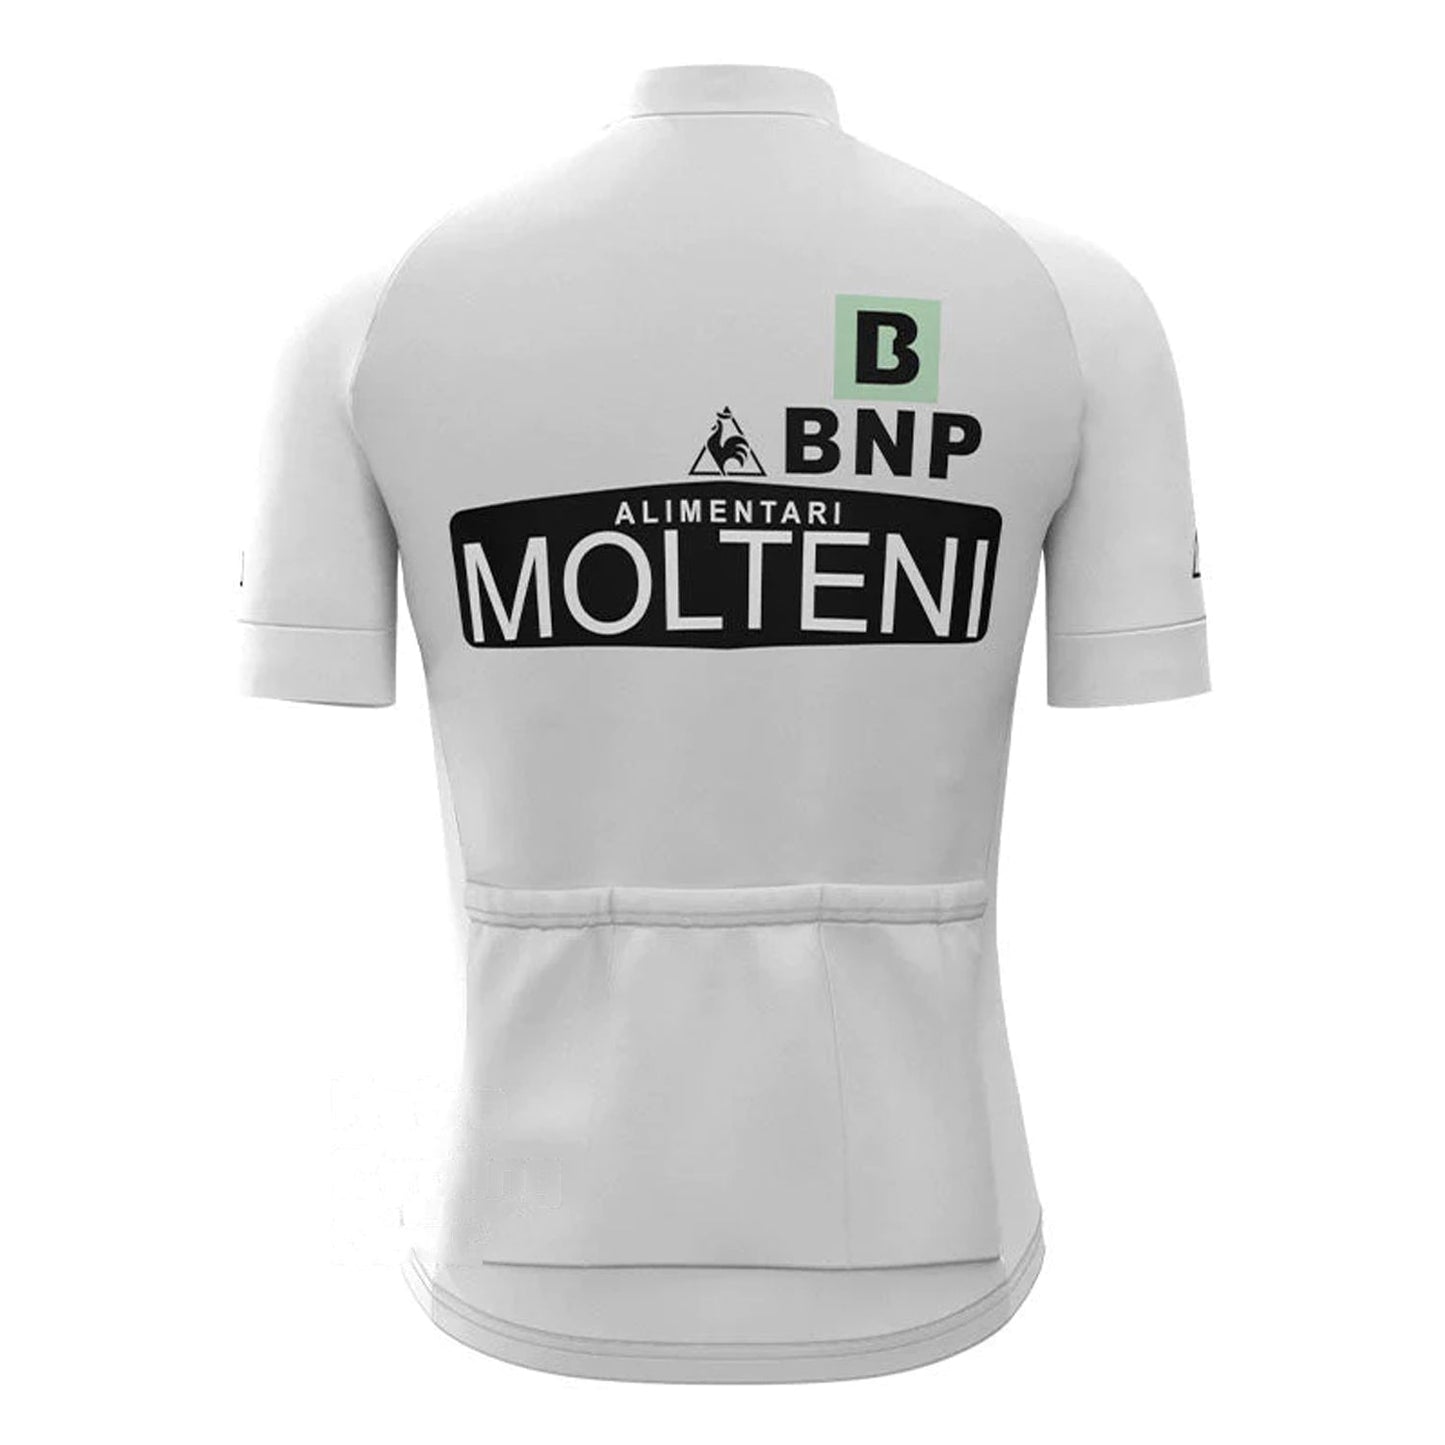 Molteni White Vintage Short Sleeve Cycling Jersey Matching Set